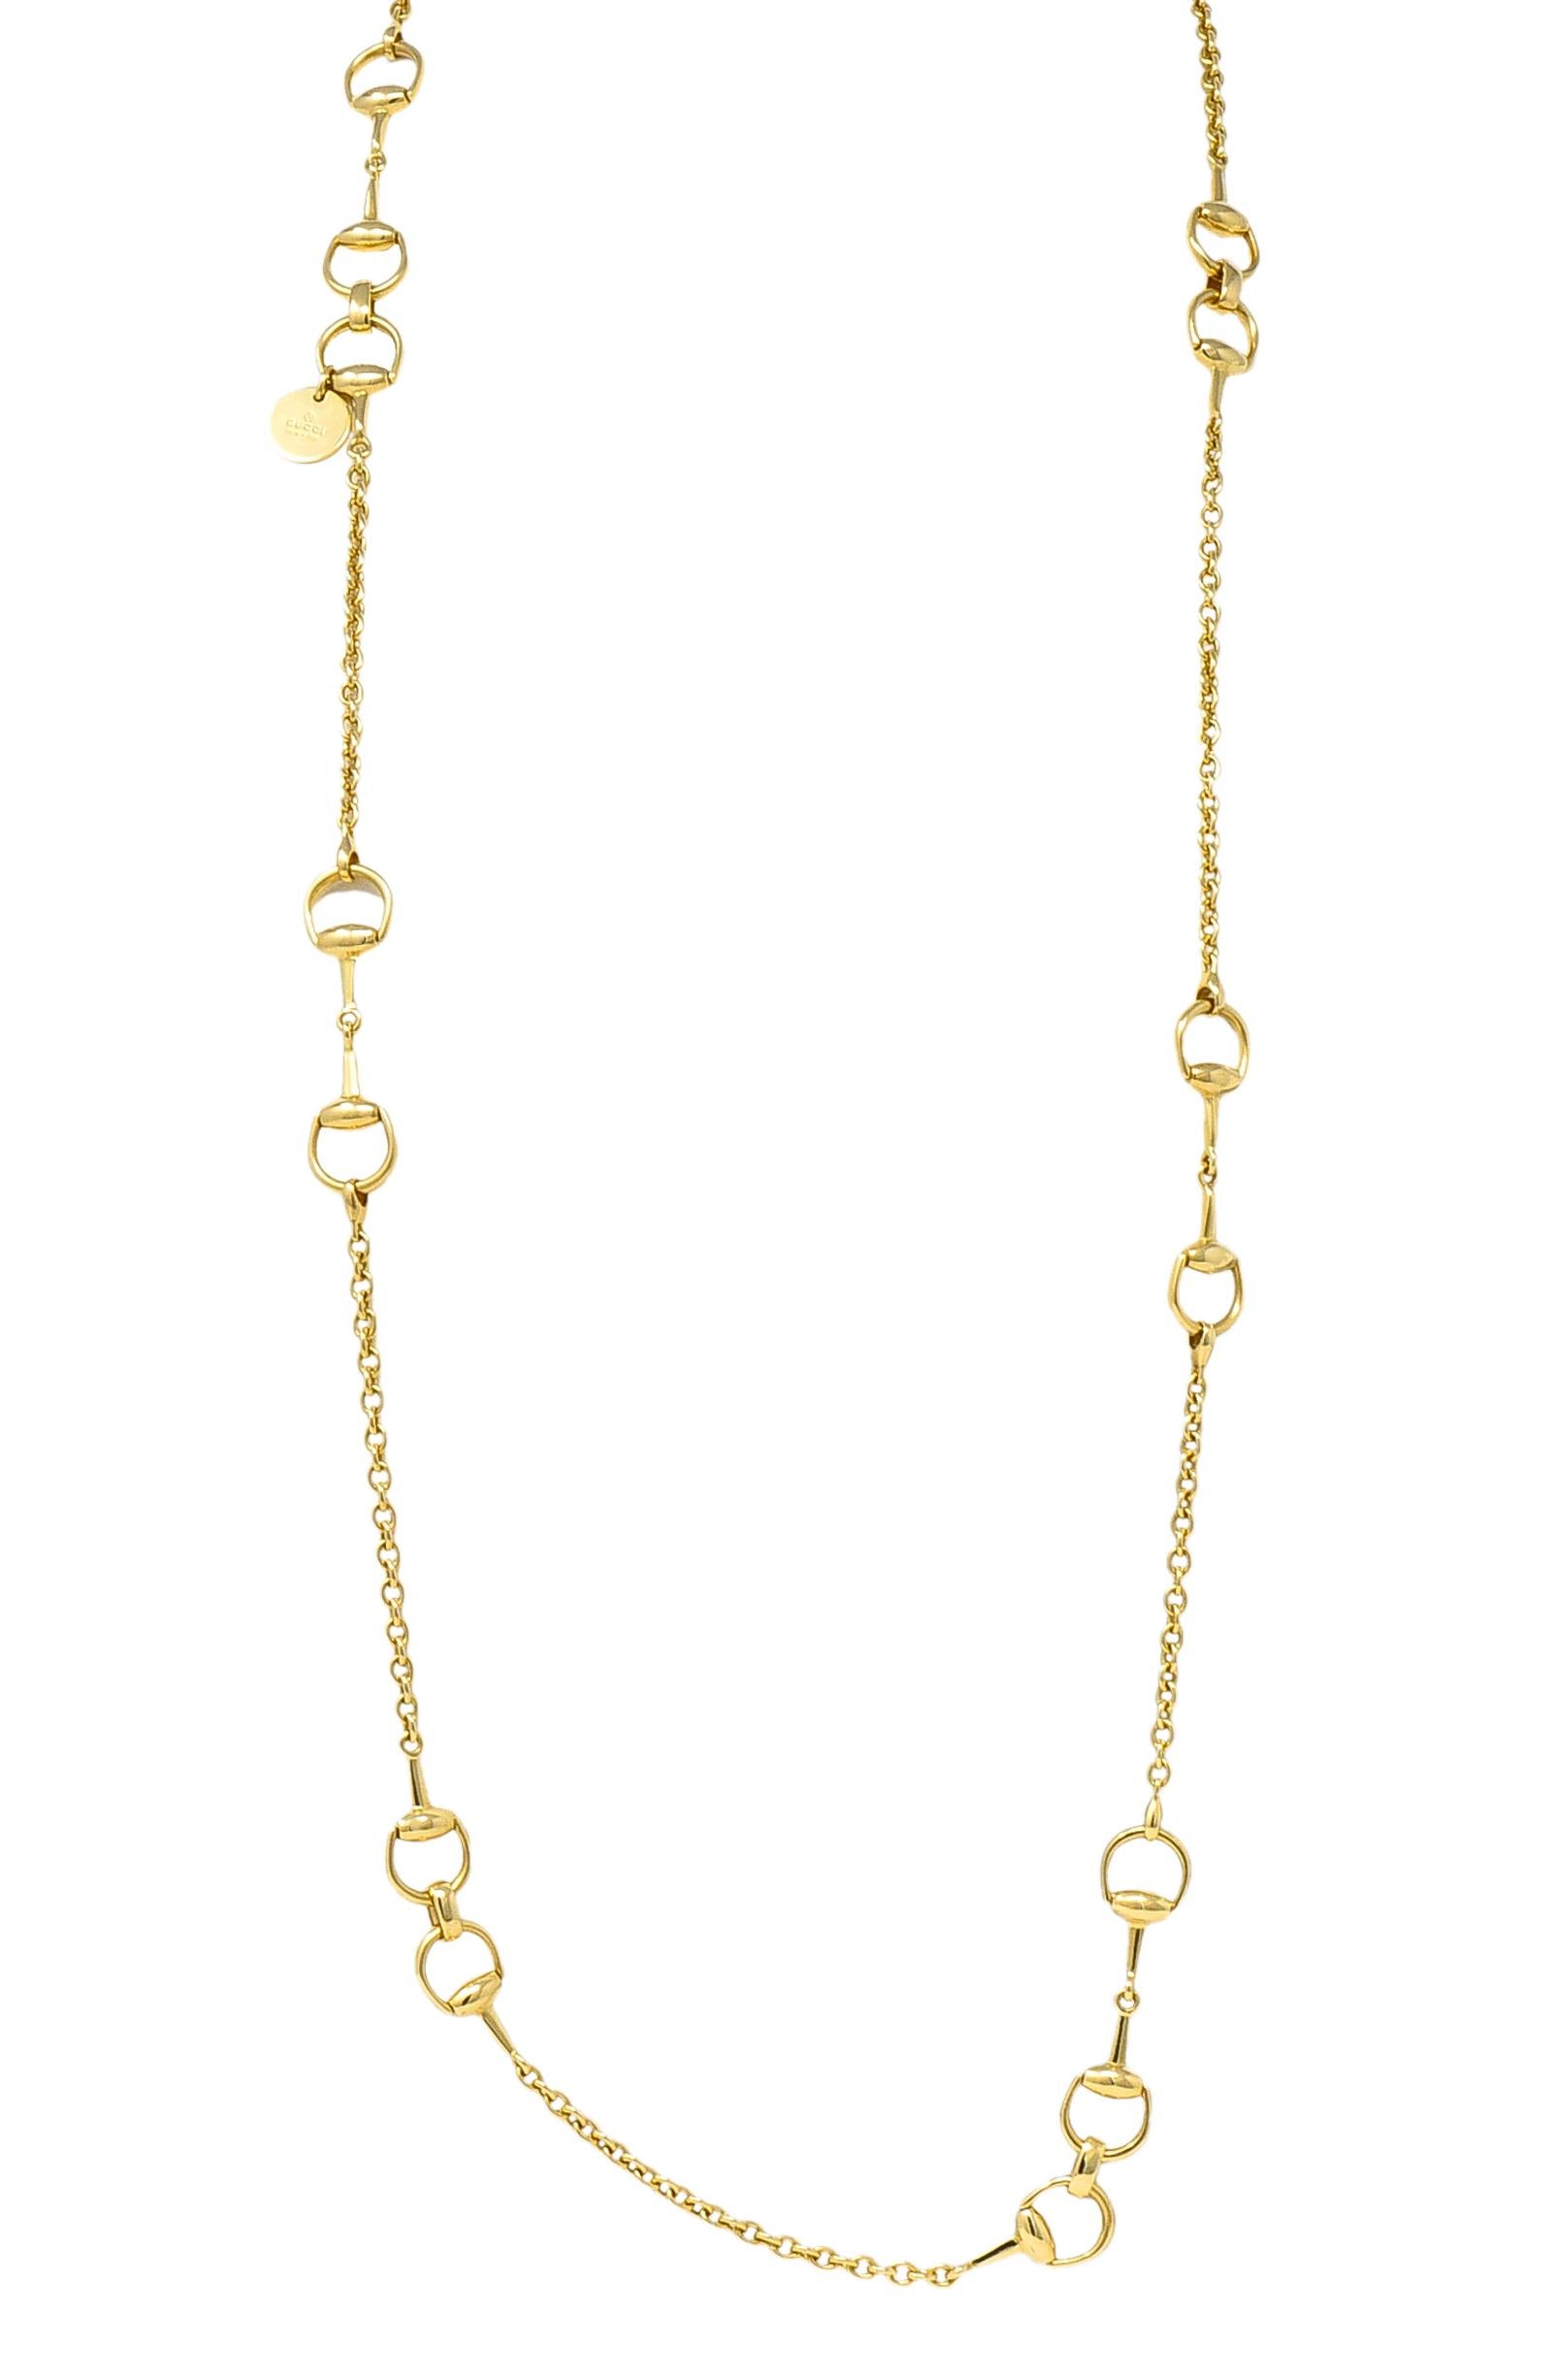 Contemporary Gucci 18 Karat Yellow Gold Horsebit Link Vintage Chain Necklace